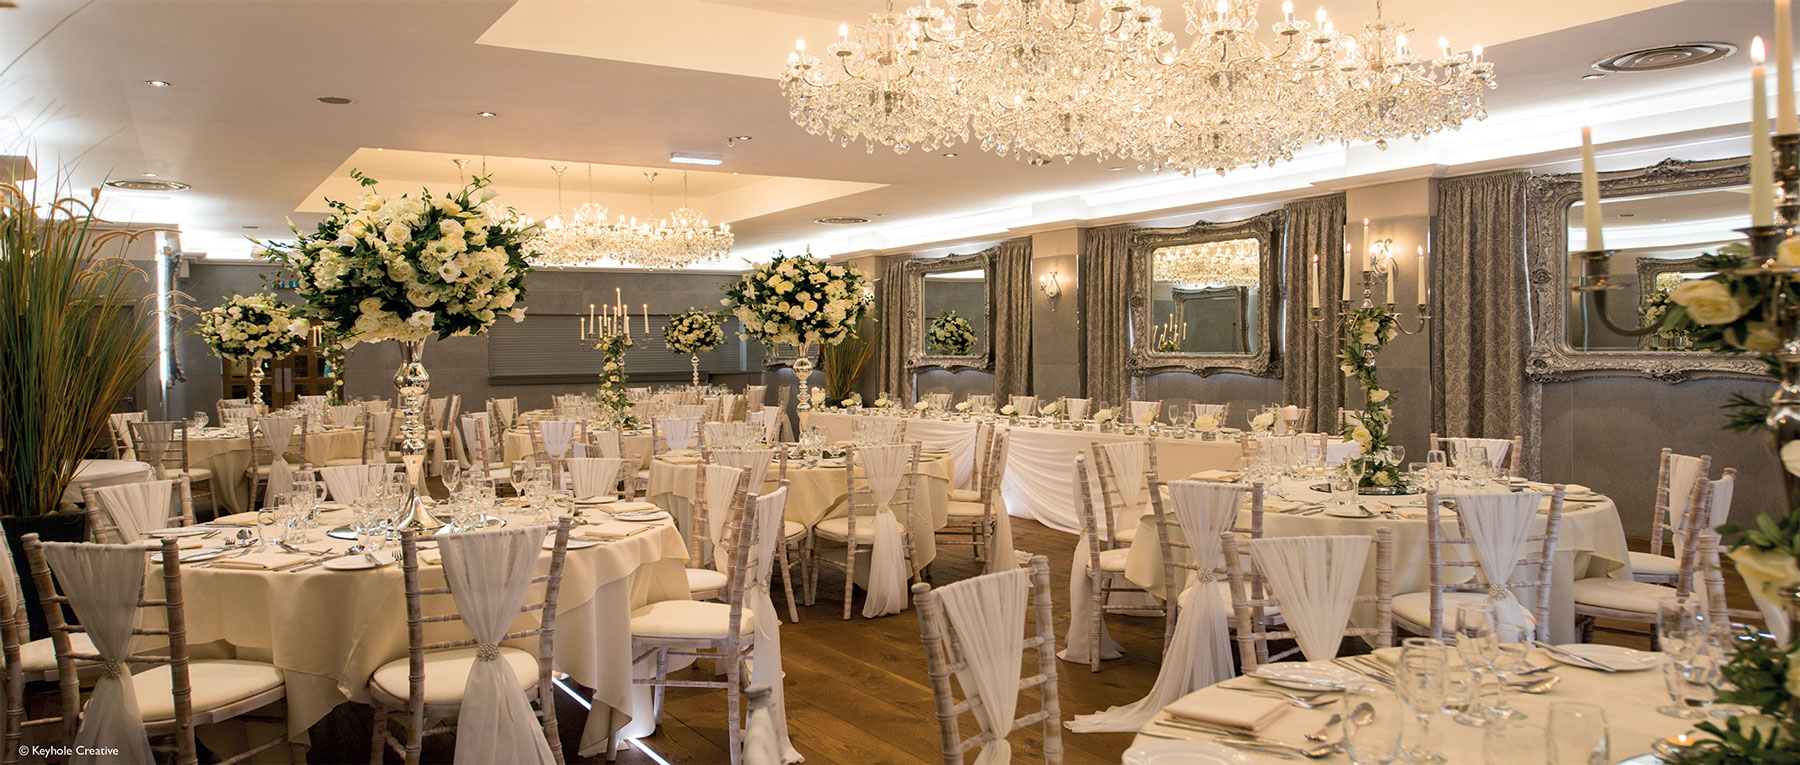 Crown Hotel Wedding venue in Doncaster